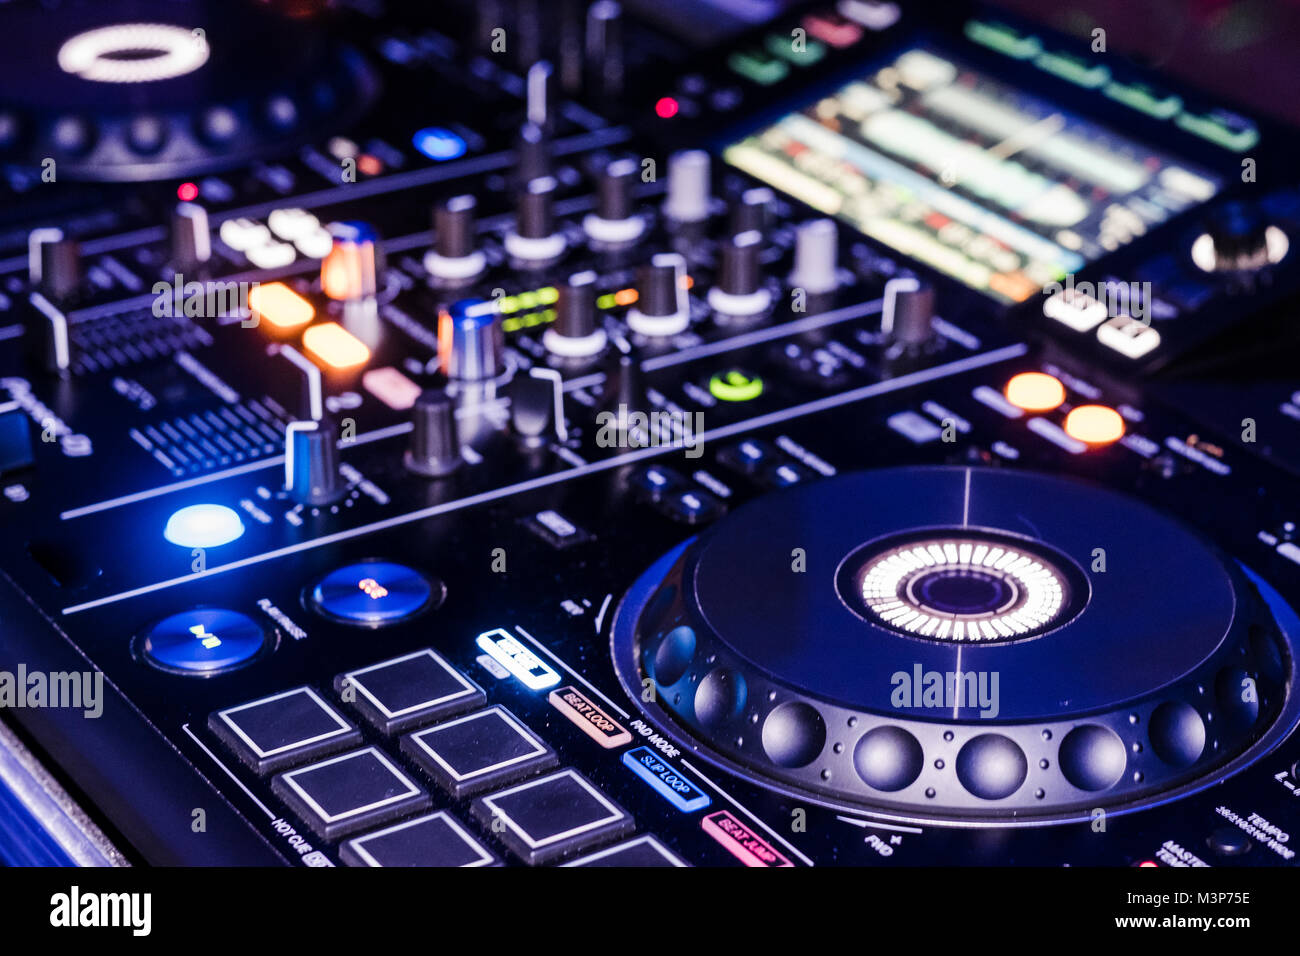 Pioneer RDJ-RX platine DJ lors d'un concert. Février 2018 Photo Stock -  Alamy